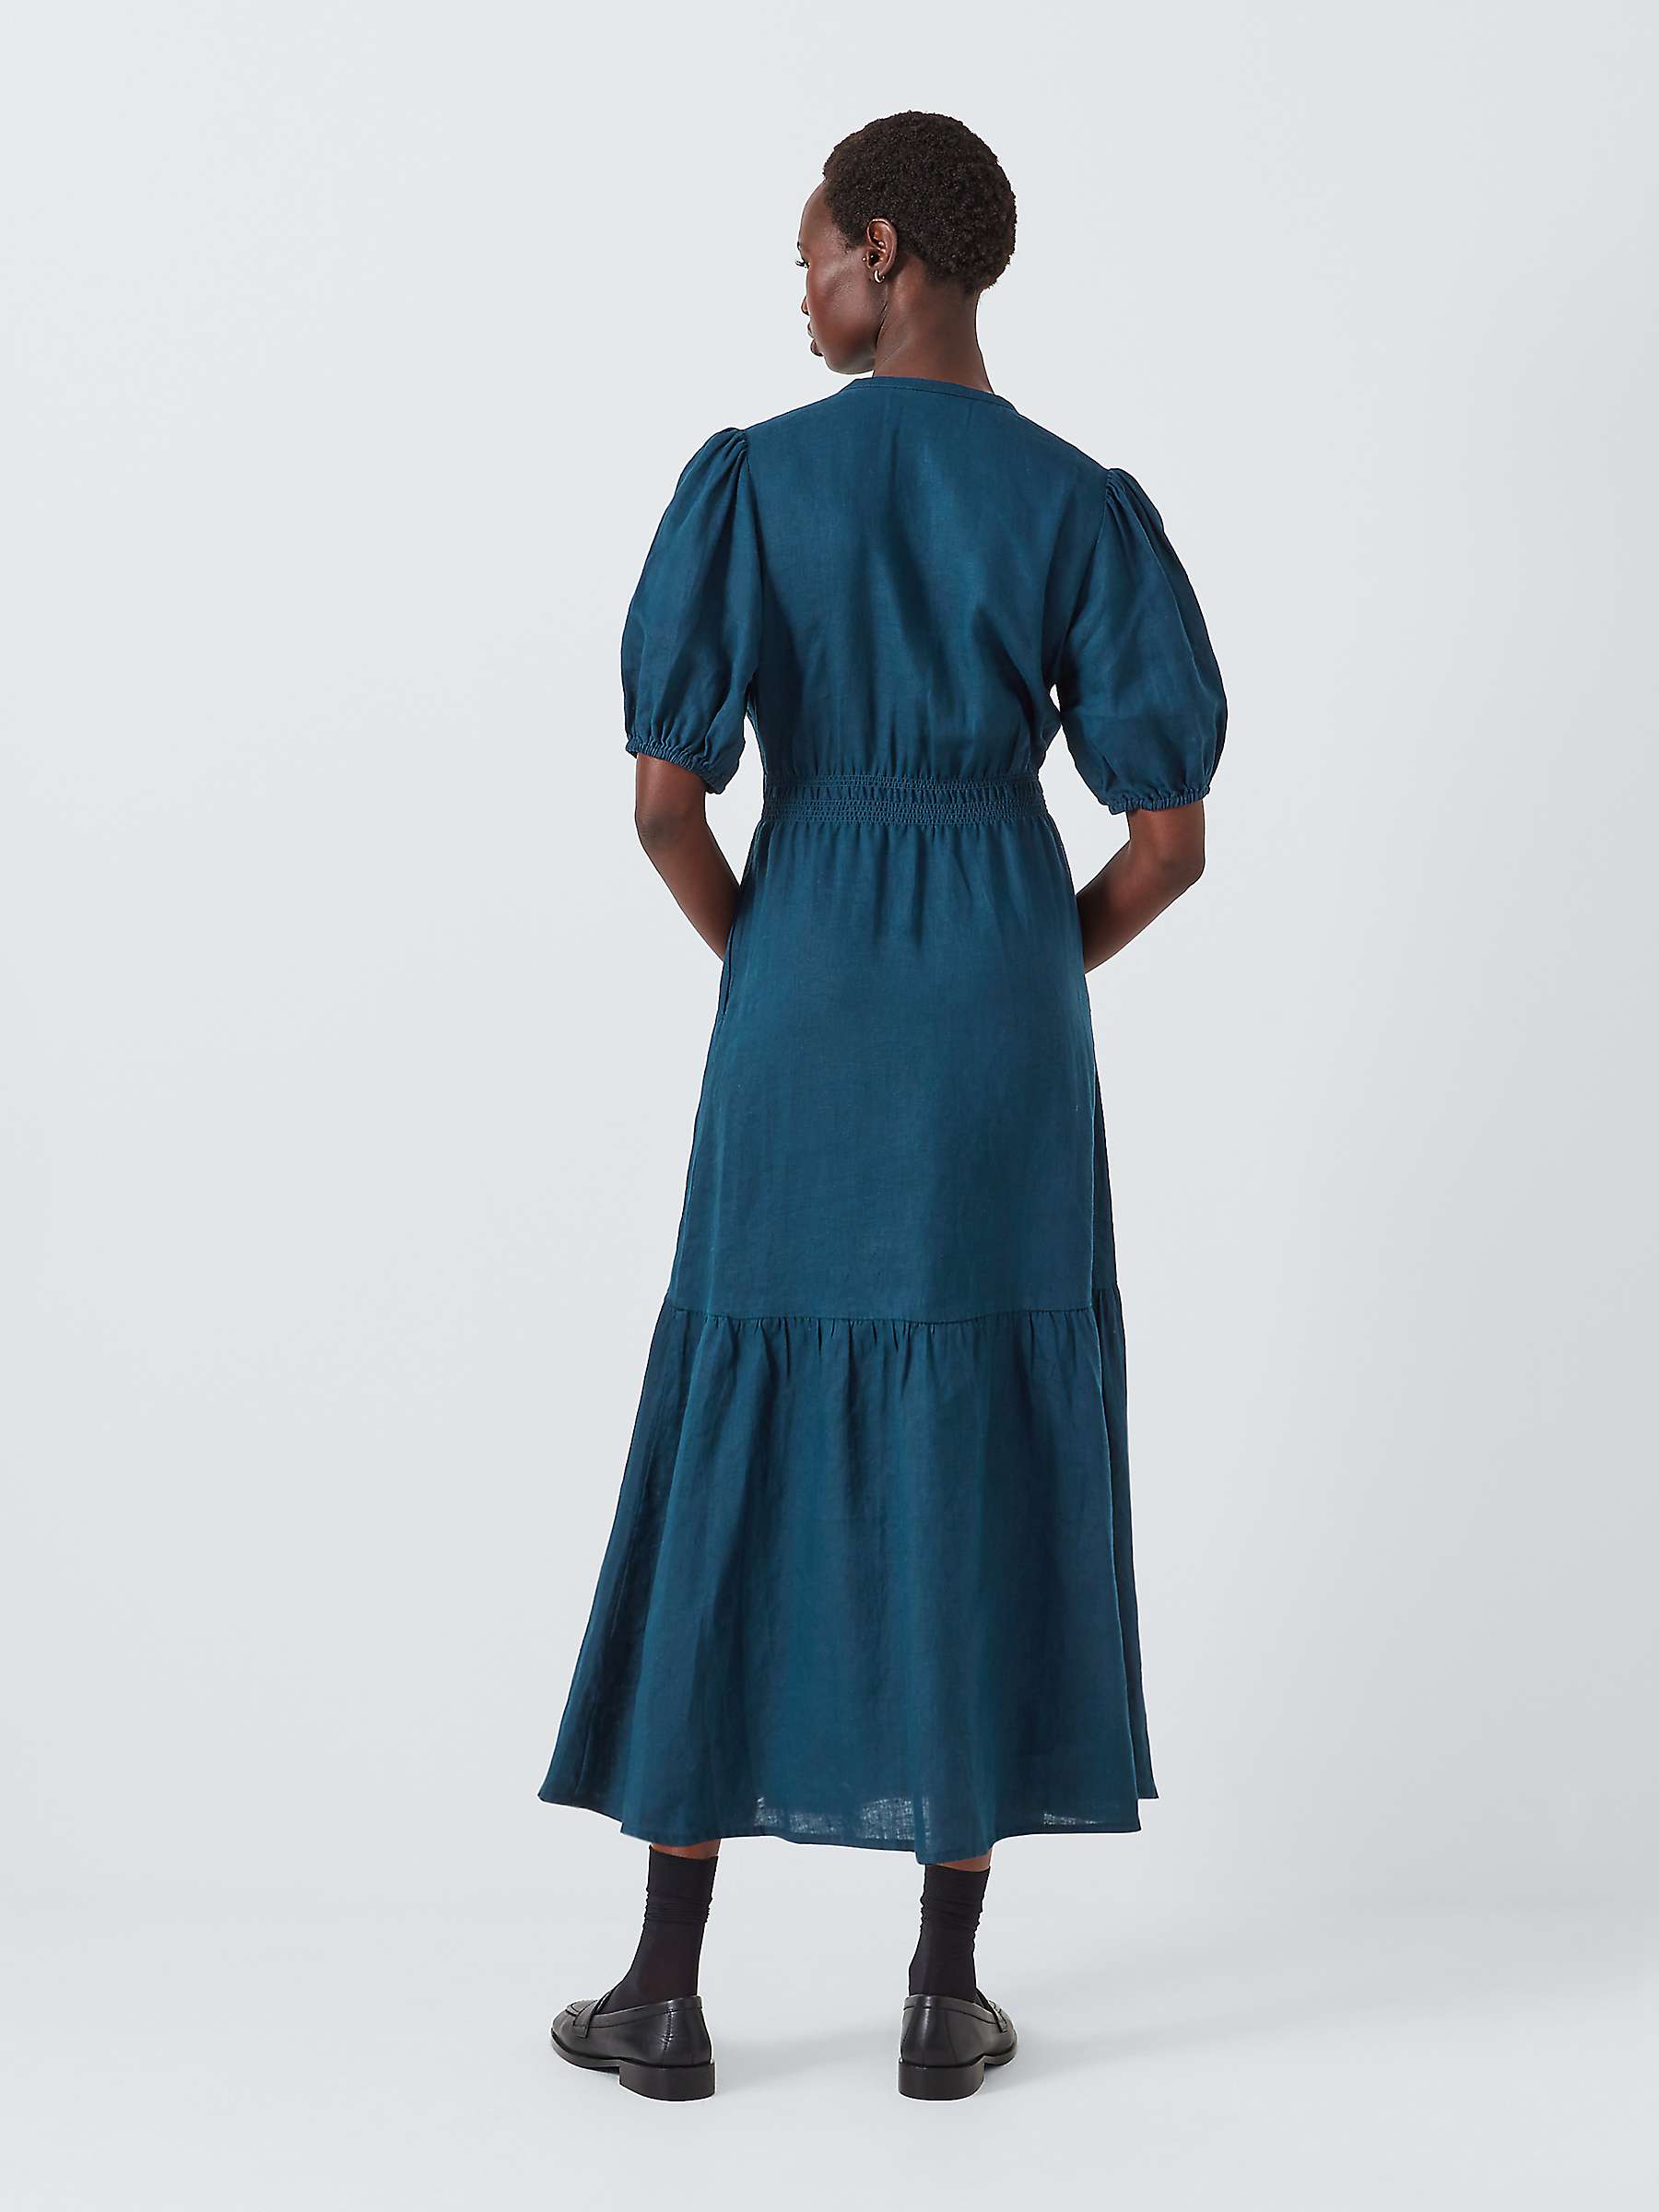 Buy John Lewis Linen Sheered Dress Online at johnlewis.com